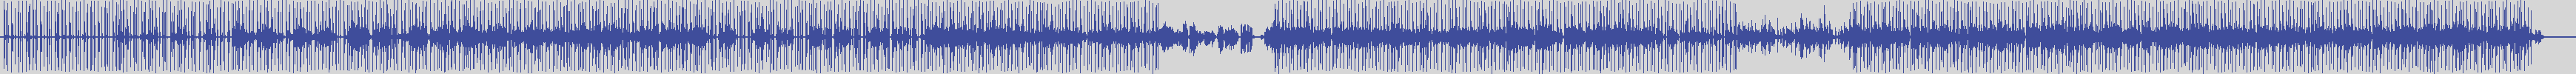 noclouds_chillout [NOC055] Dr Drummer - Happiness [Original Mix] audio wave form